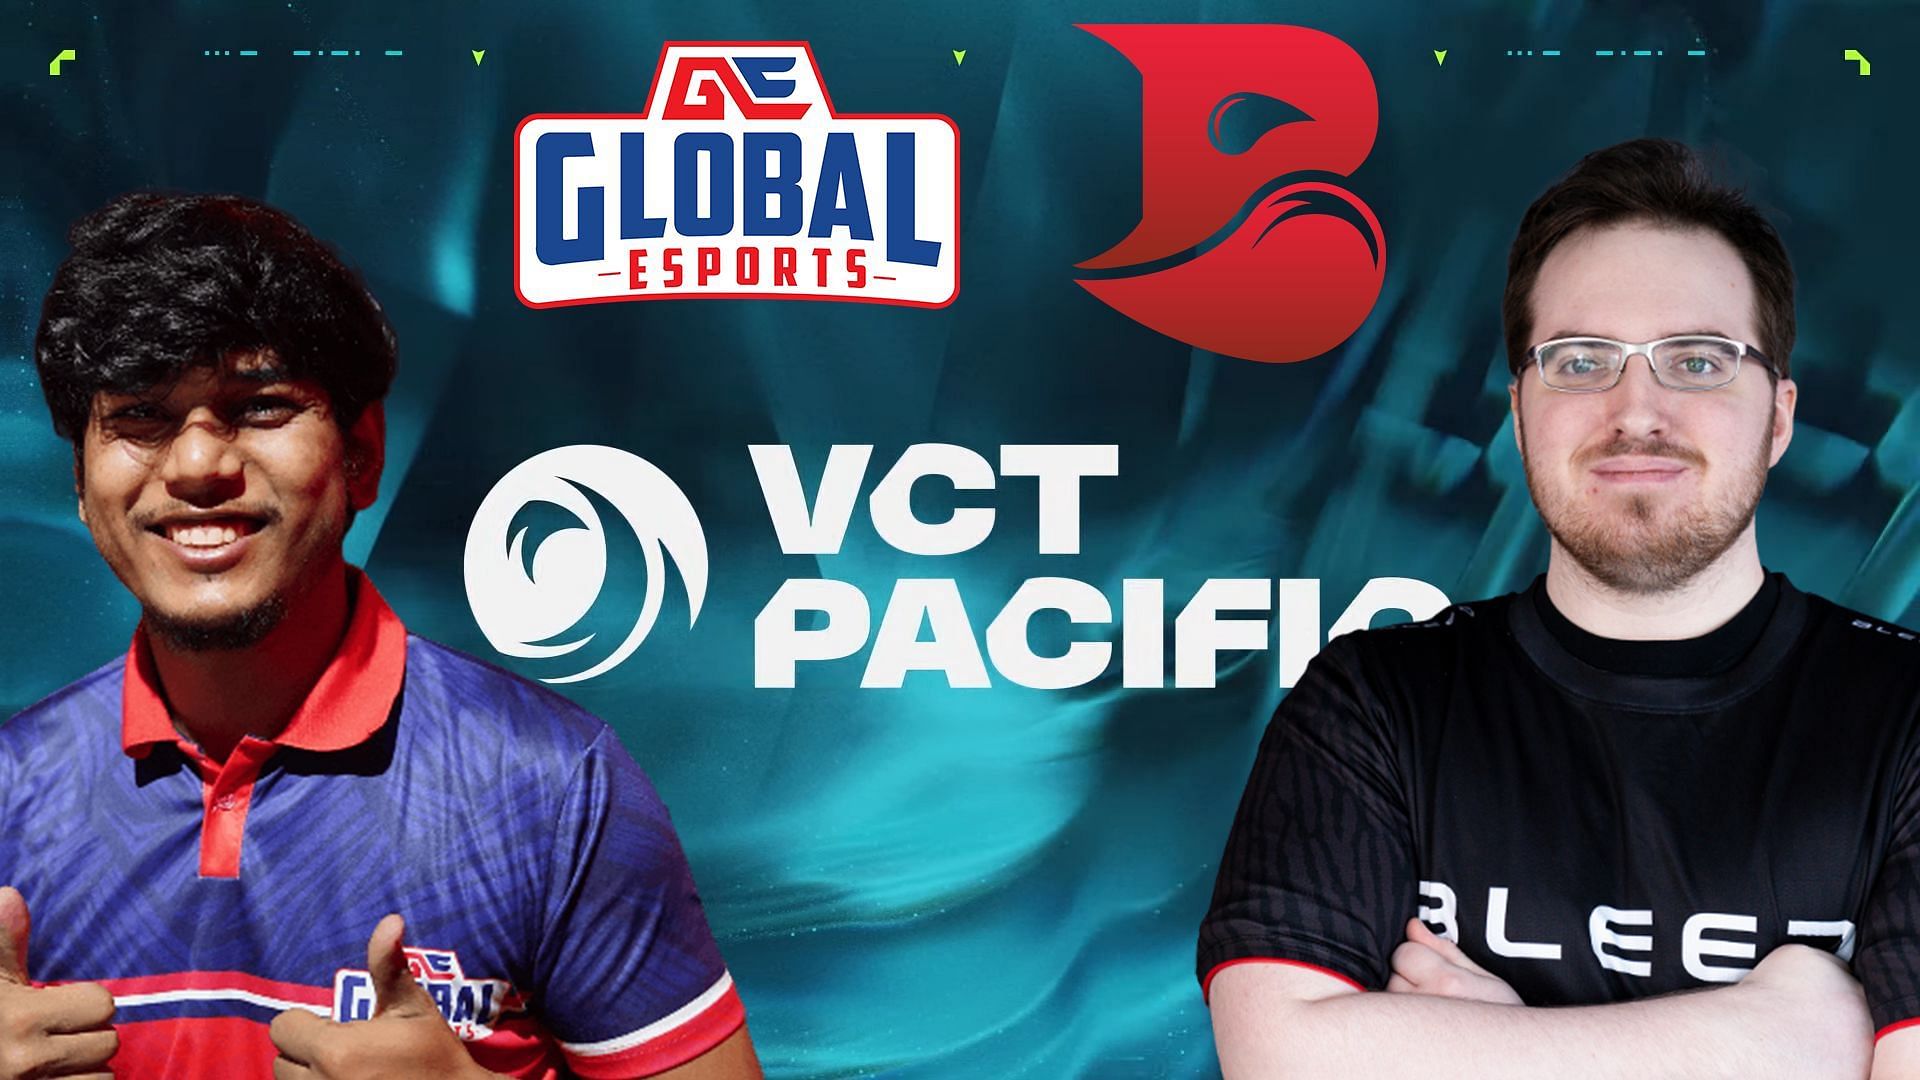 Global Esports vs BLEED at VCT Pacific Kickoff (Image via Riot Games, Global Esports and BLEED)